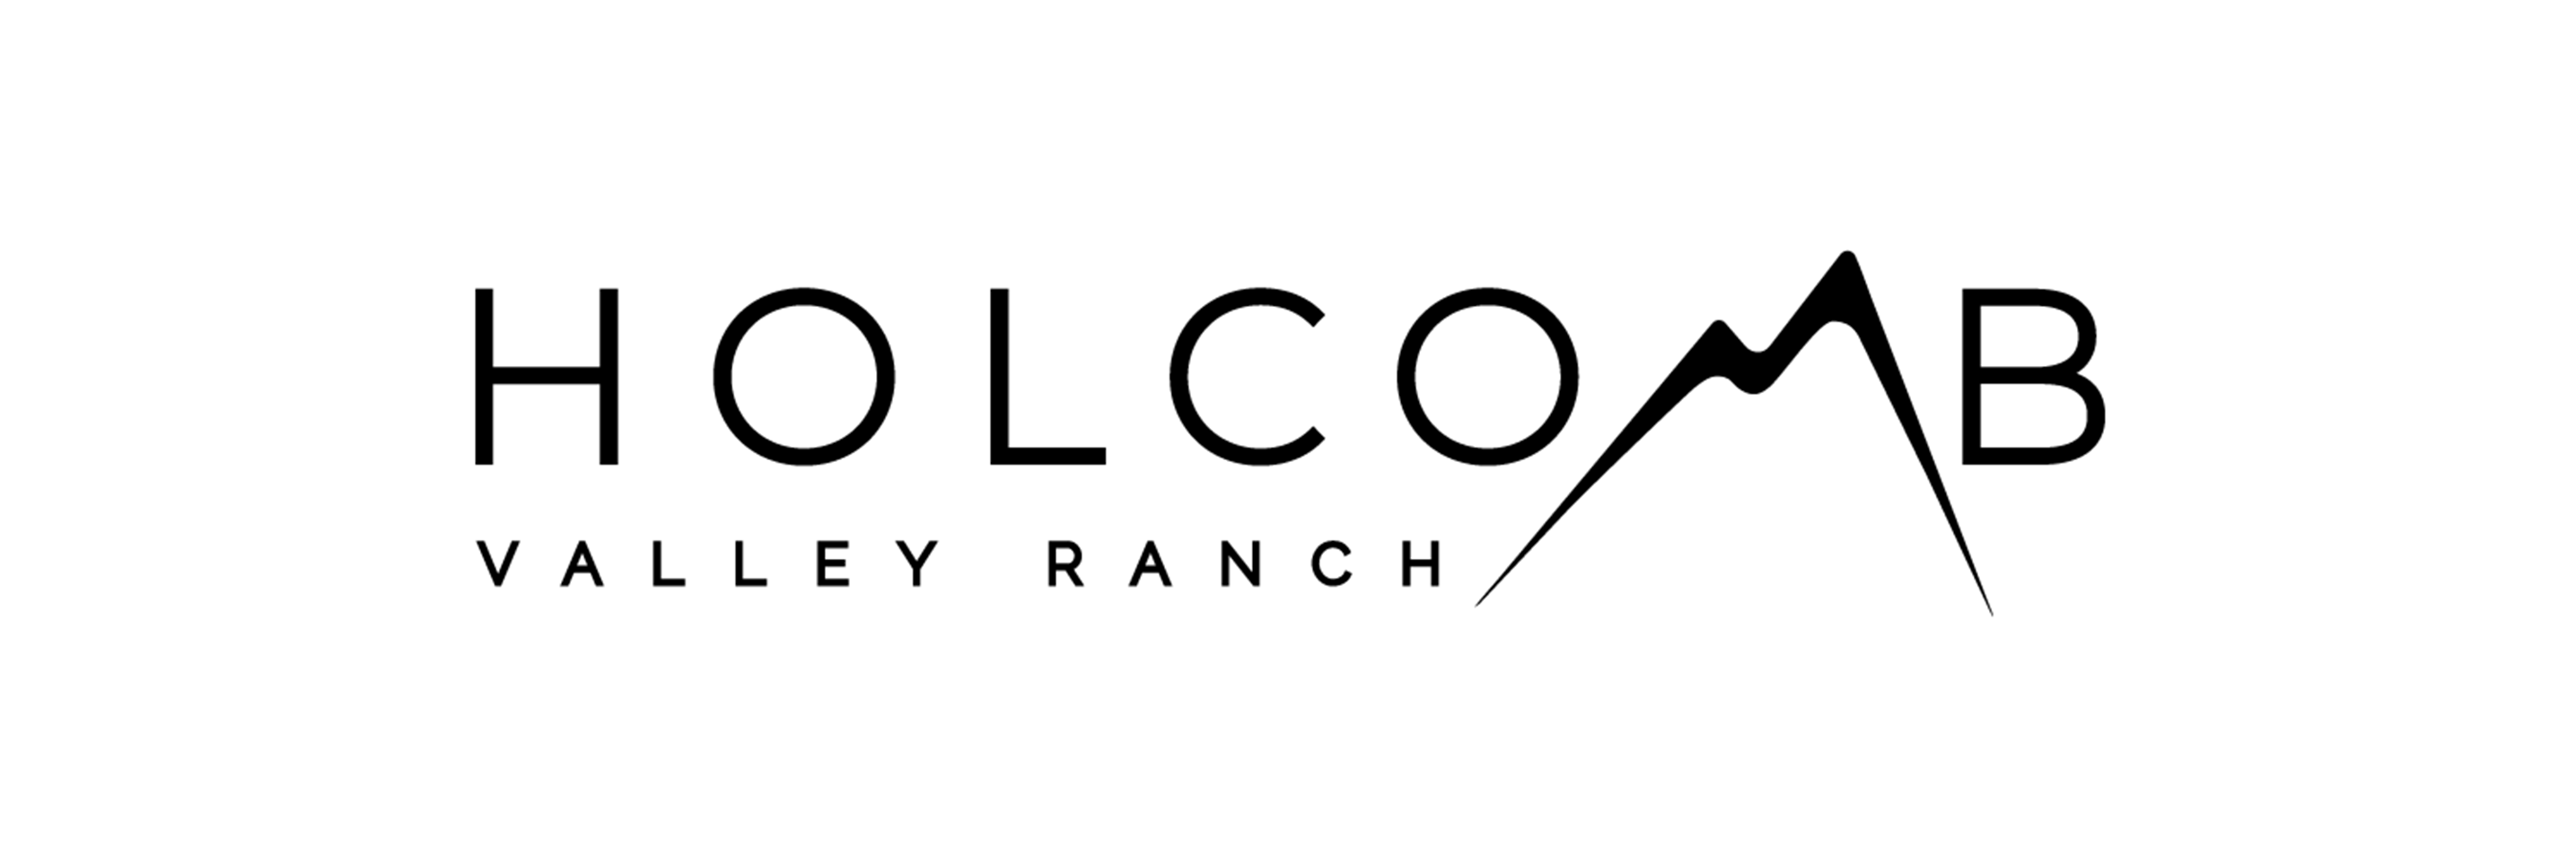 Holcomb Valley Ranch Logo